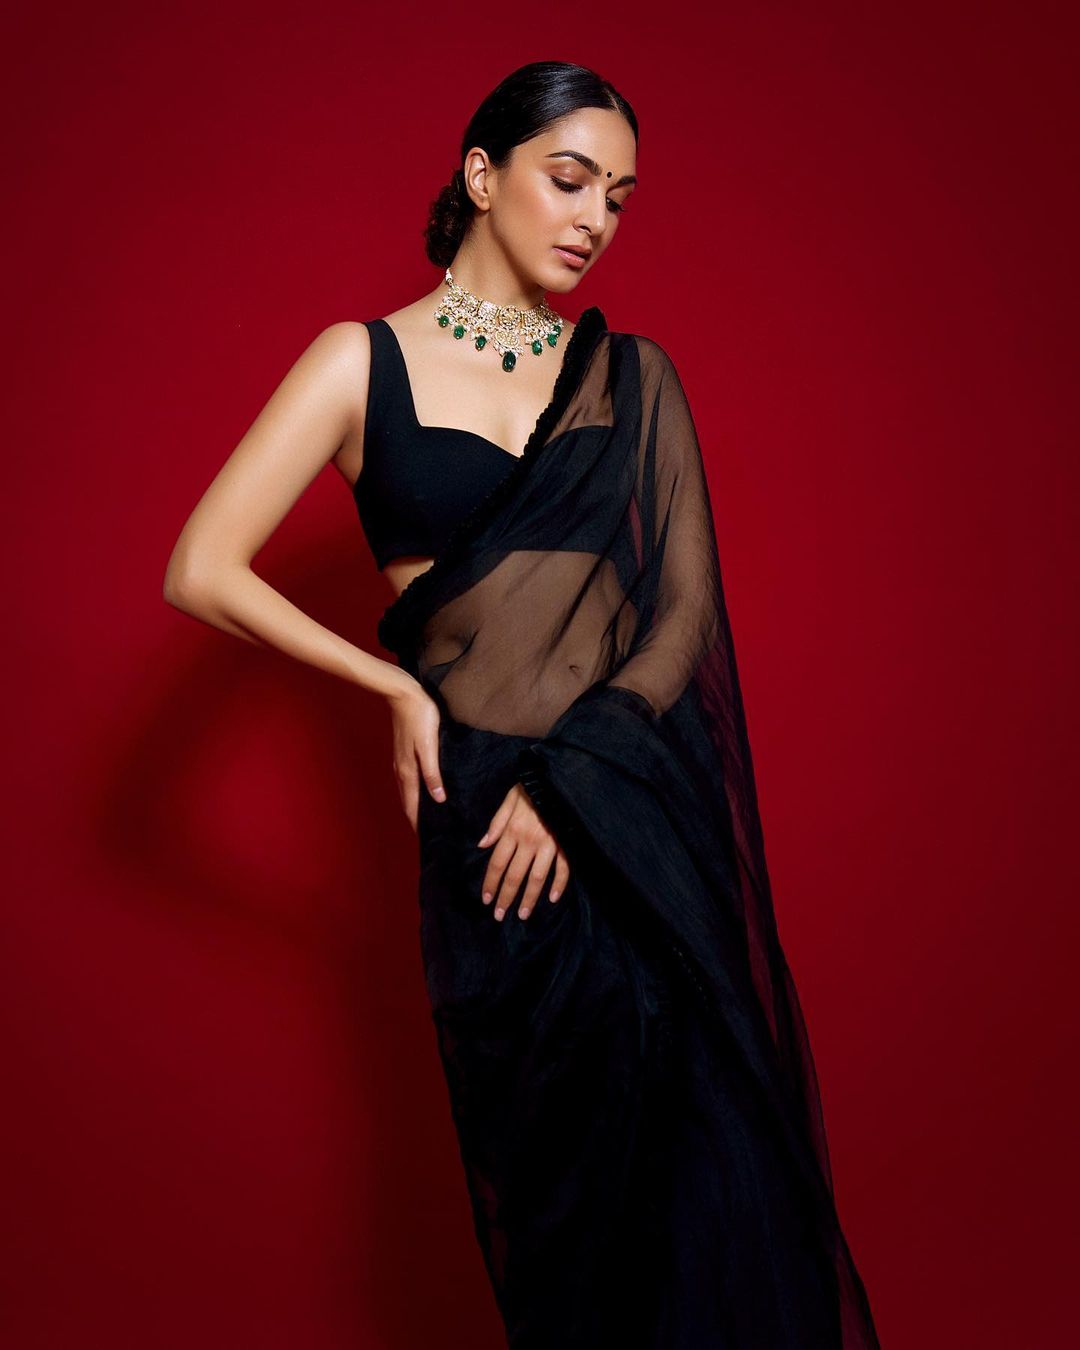 From Katrina Kaif to Kiara Advani, here are 5 Bollywood-inspired black saree looks you should save this wedding season.